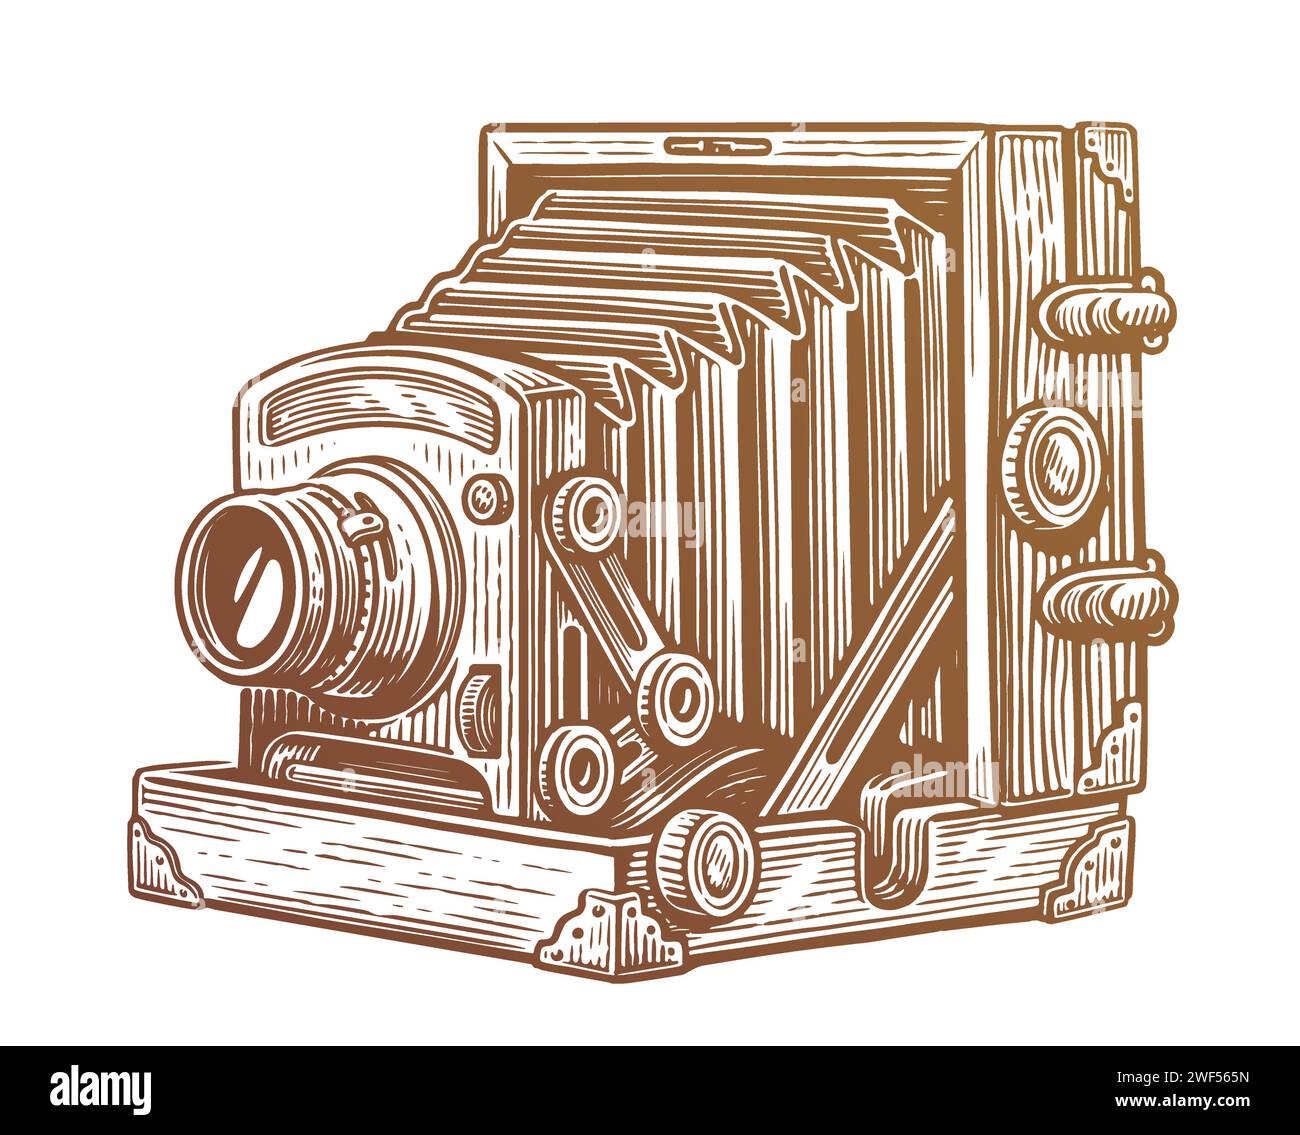 Old vintage camera with bellows. Retro wooden photo camera. Sketch vector illustration Stock Vector